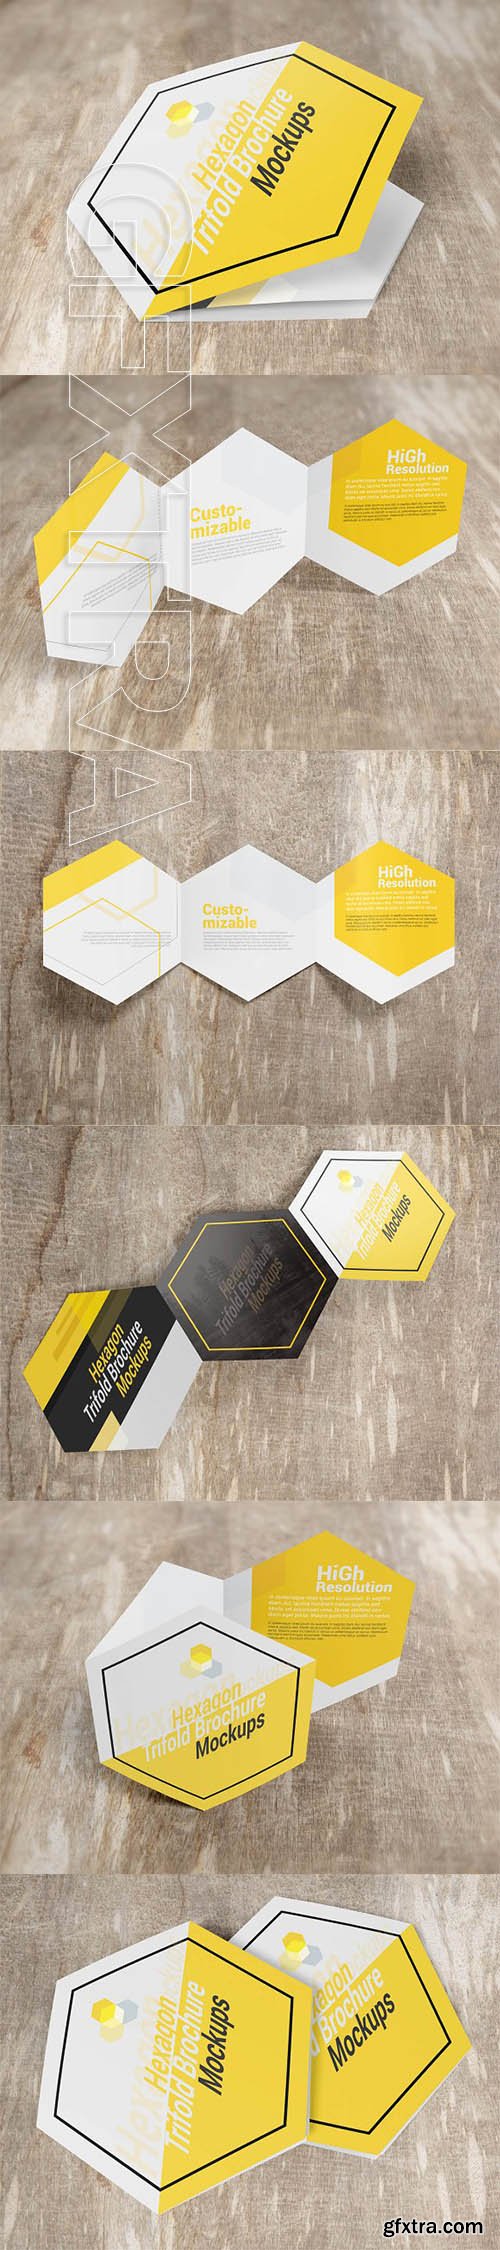 CreativeMarket - Hexagon Trifold Brochure Mockups 2180719